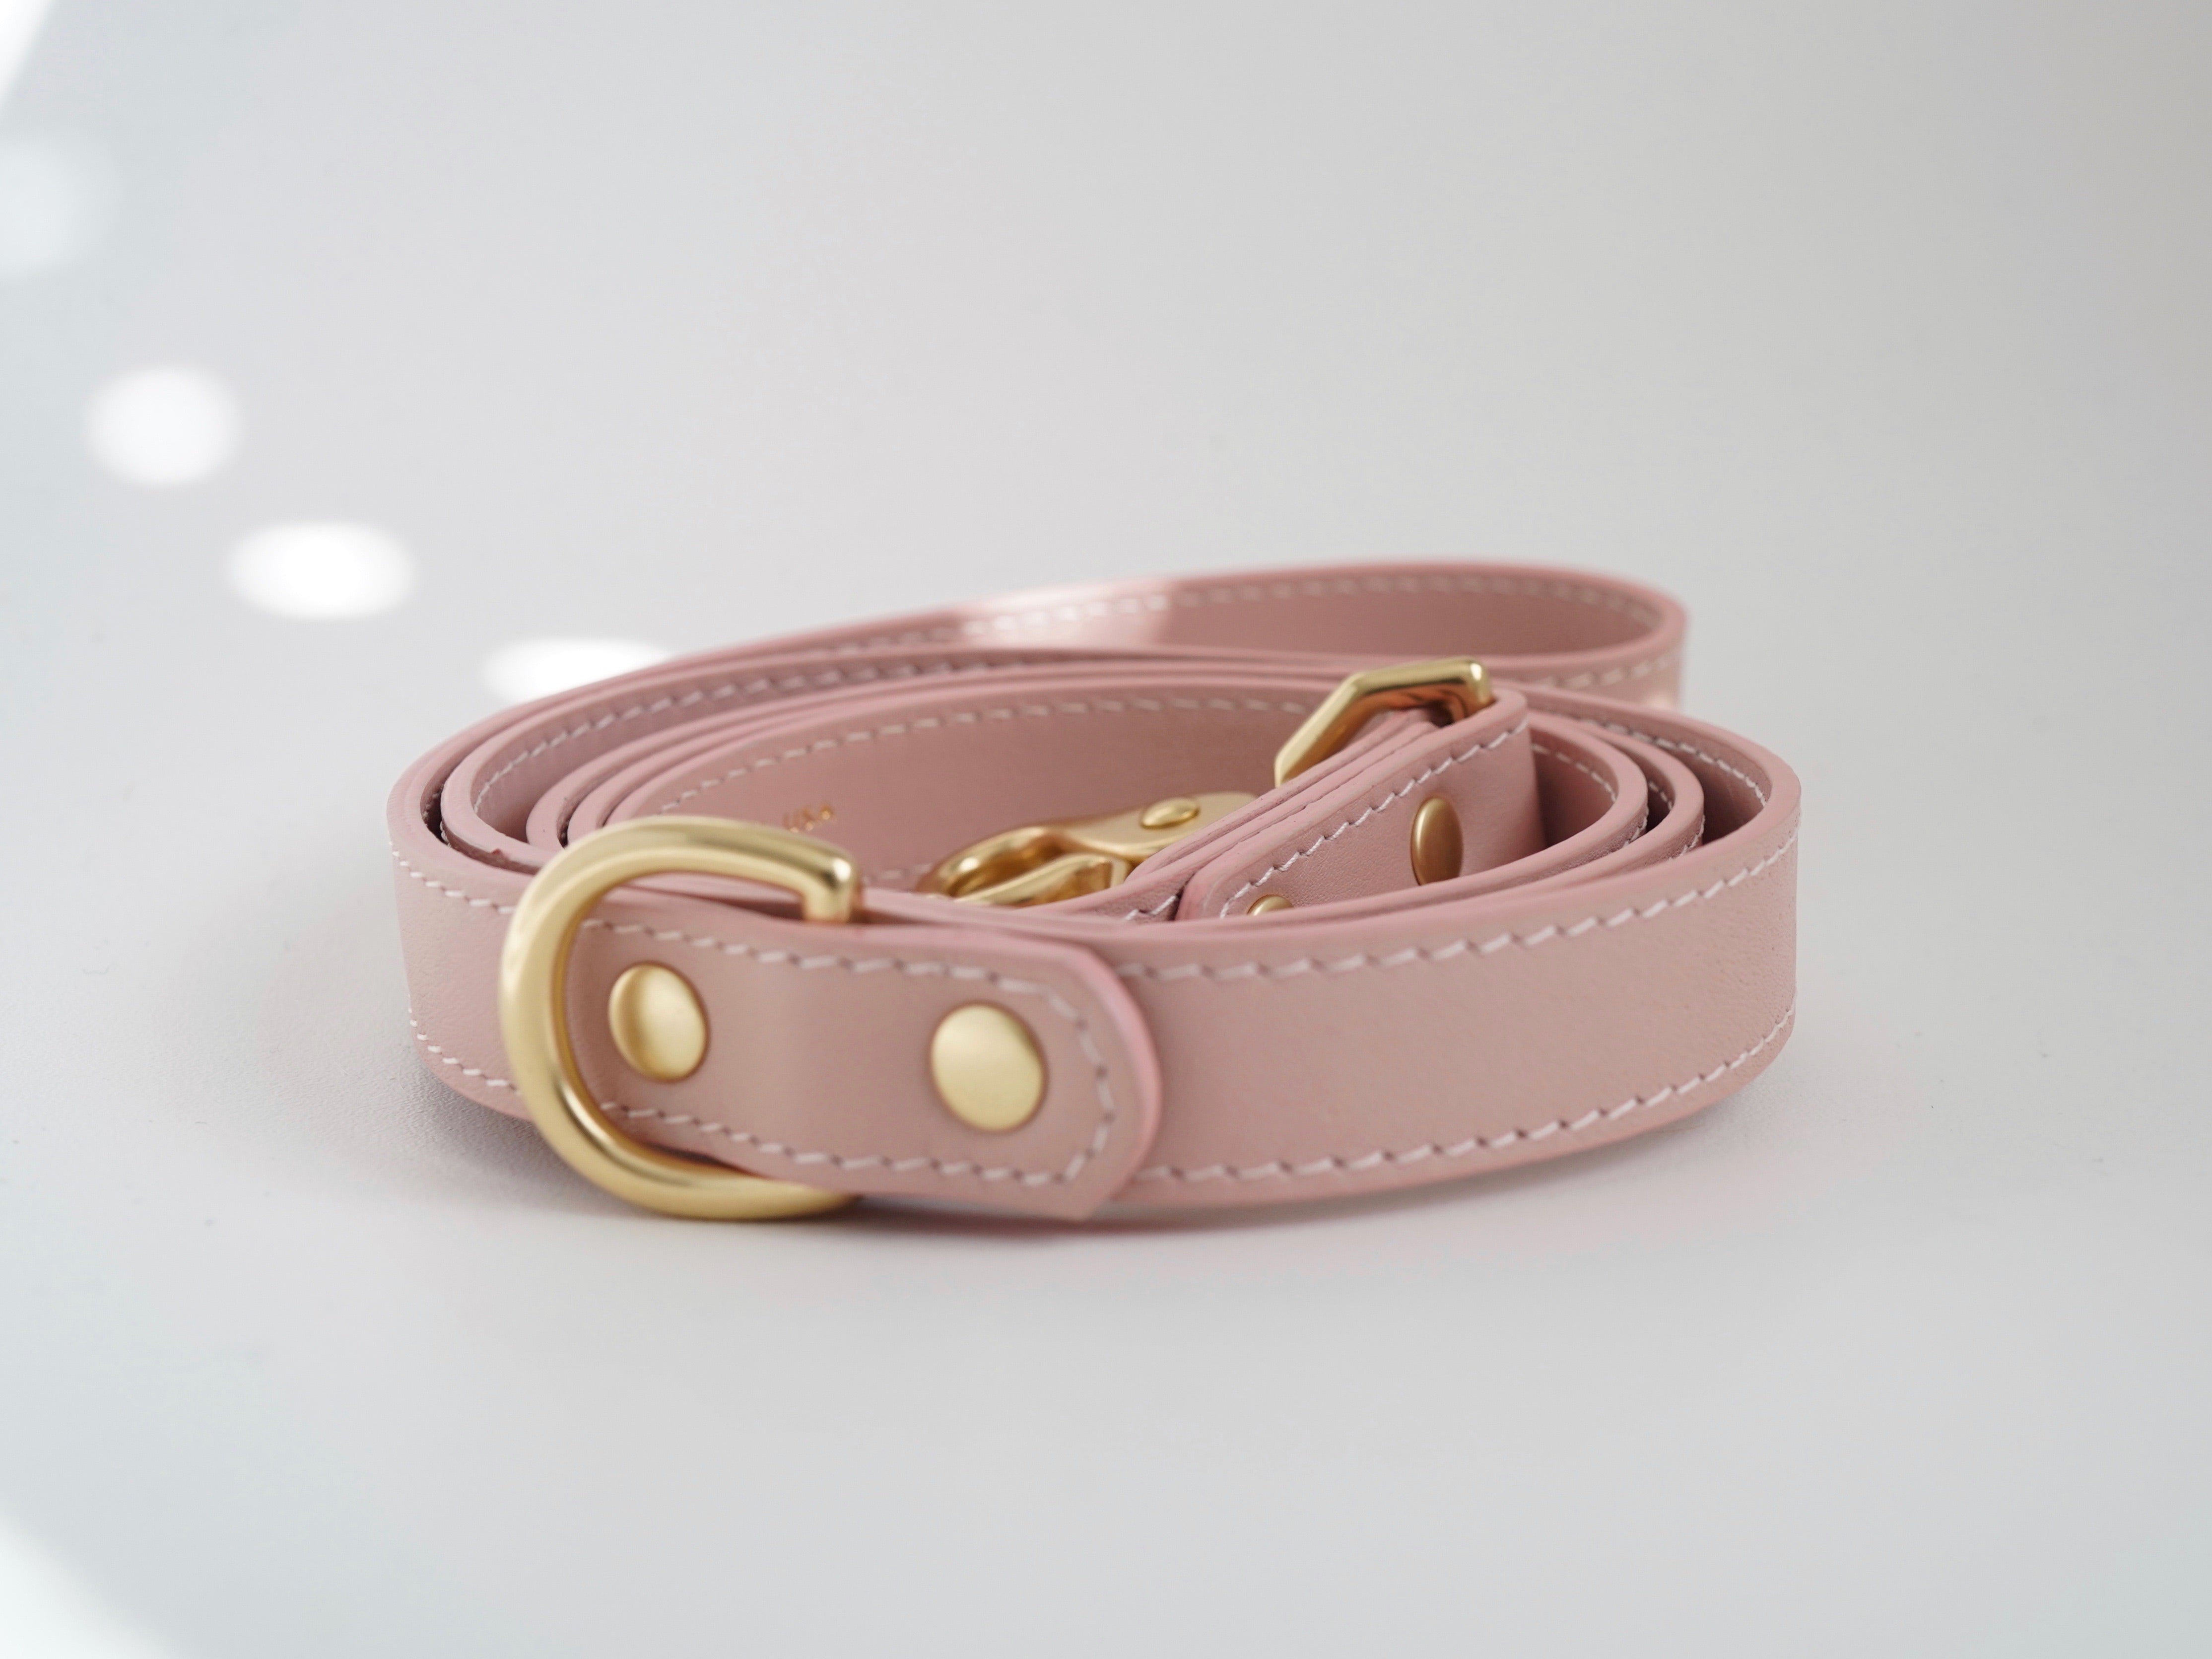 Blush pink leather leash